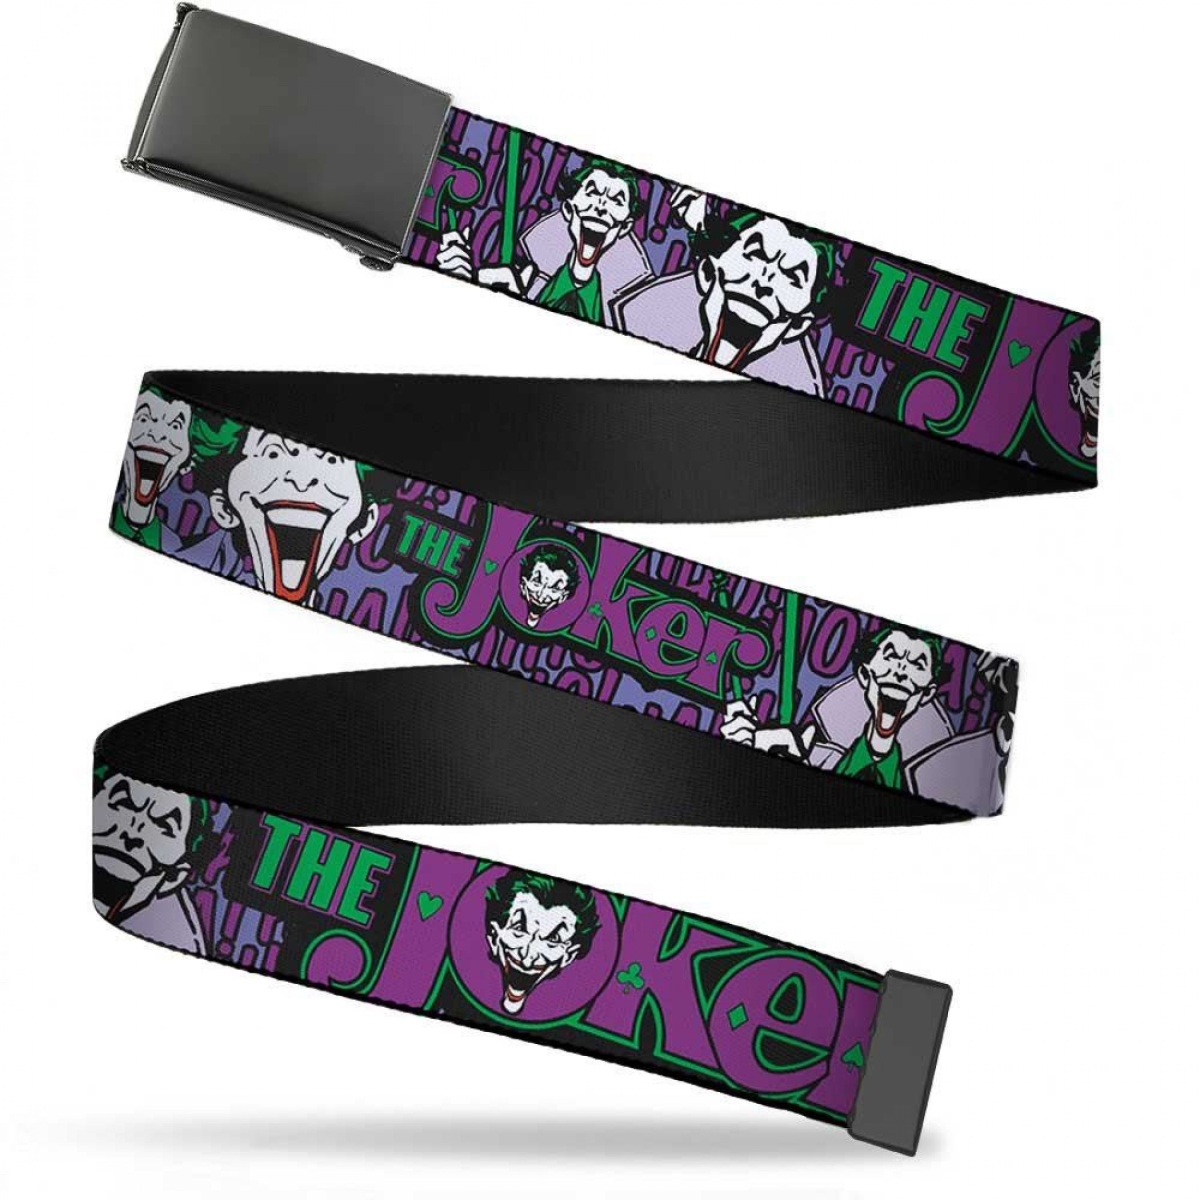 Picture of Joker beltjokerlghlgo-1.5 Joker Classic Logo & Laughter Adult Web Belts